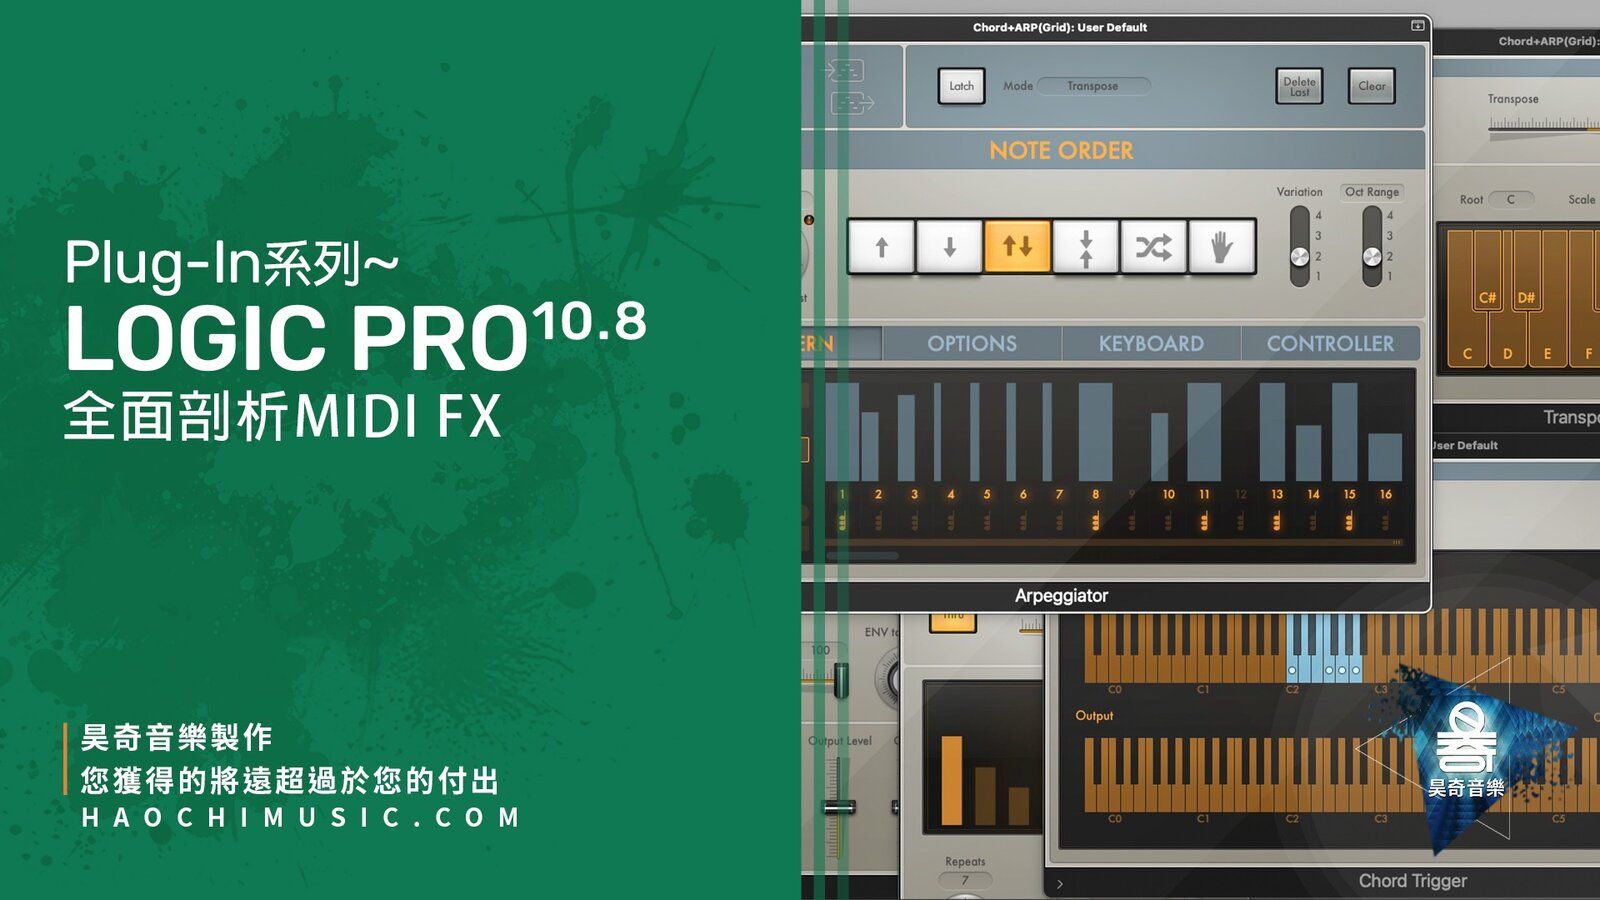 Logic Pro MIDI FX copy.jpeg